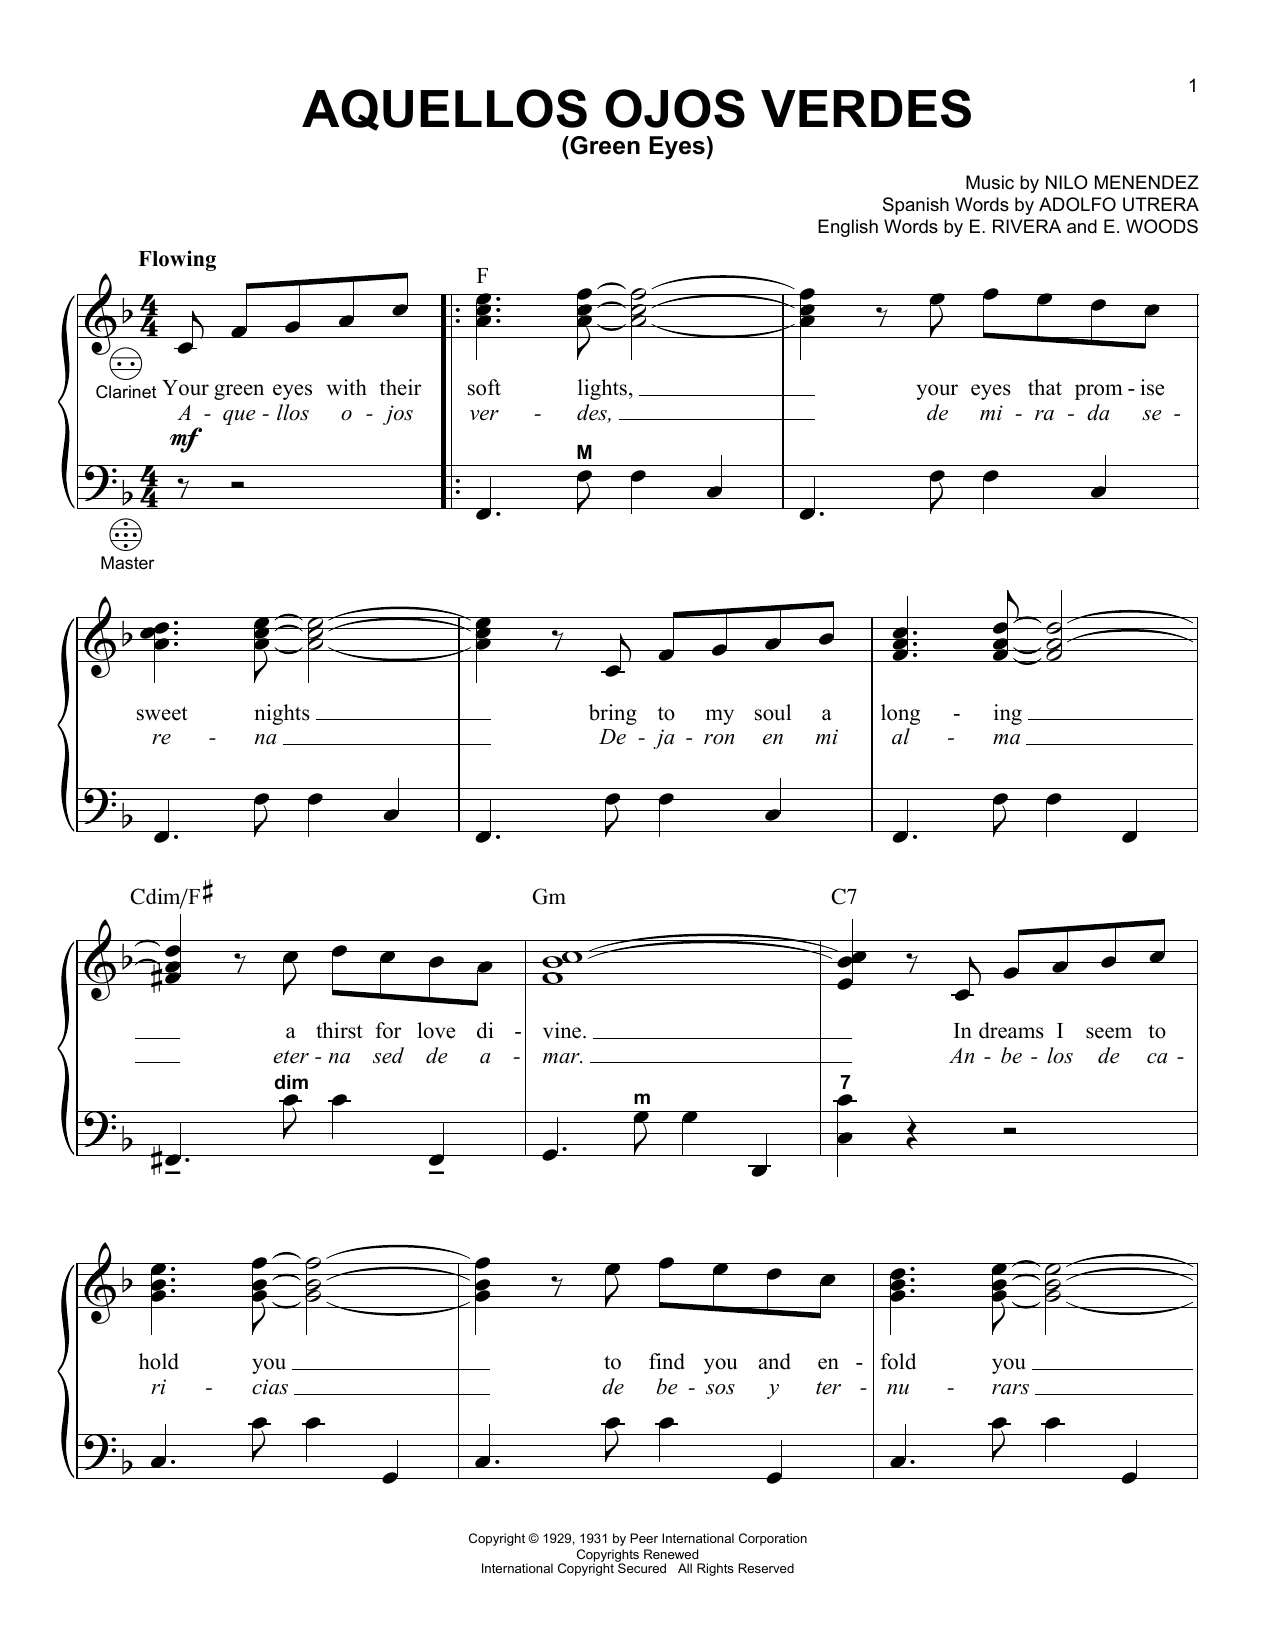 Gary Meisner Aquellos Ojos Verdes (Green Eyes) Sheet Music Notes & Chords for Accordion - Download or Print PDF